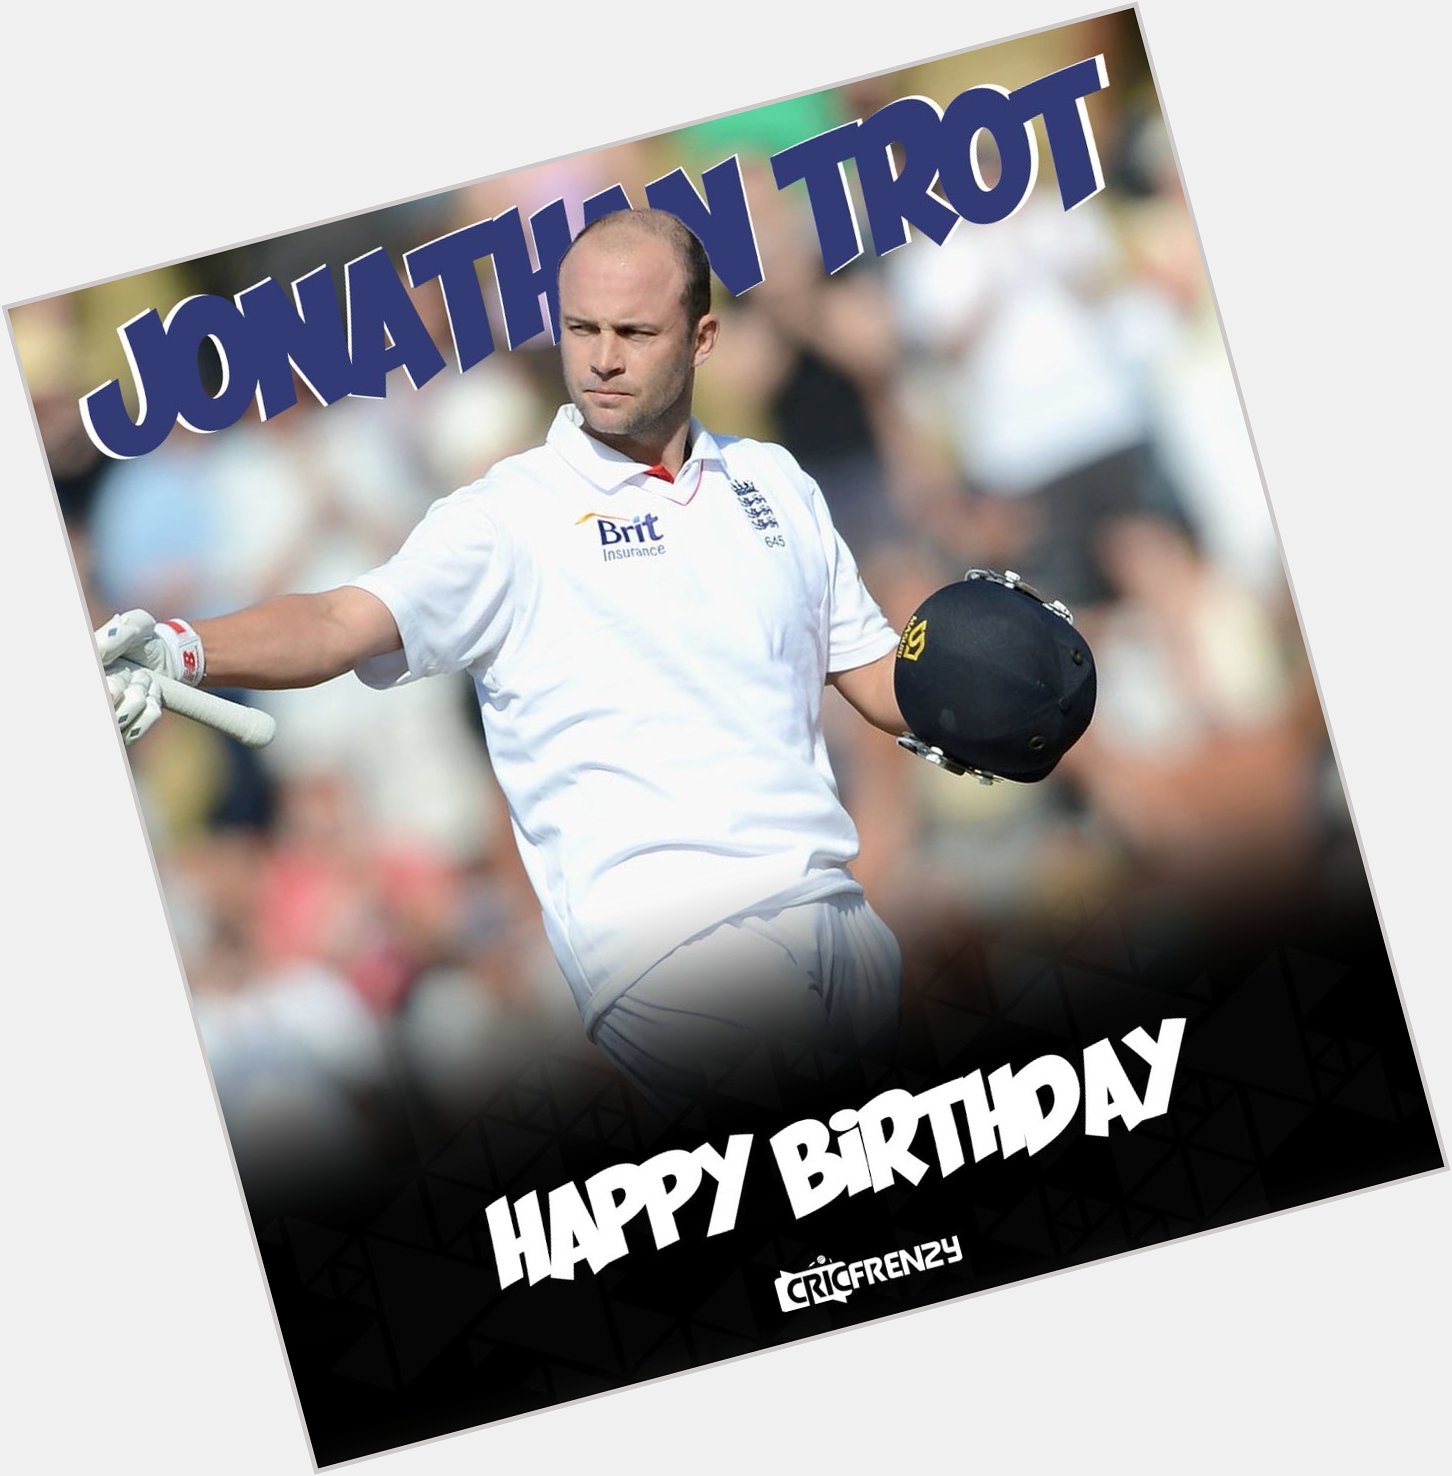 Three time Ashes winner: 2009, 2010/11, 2013
Happy birthday Jonathan Trott    